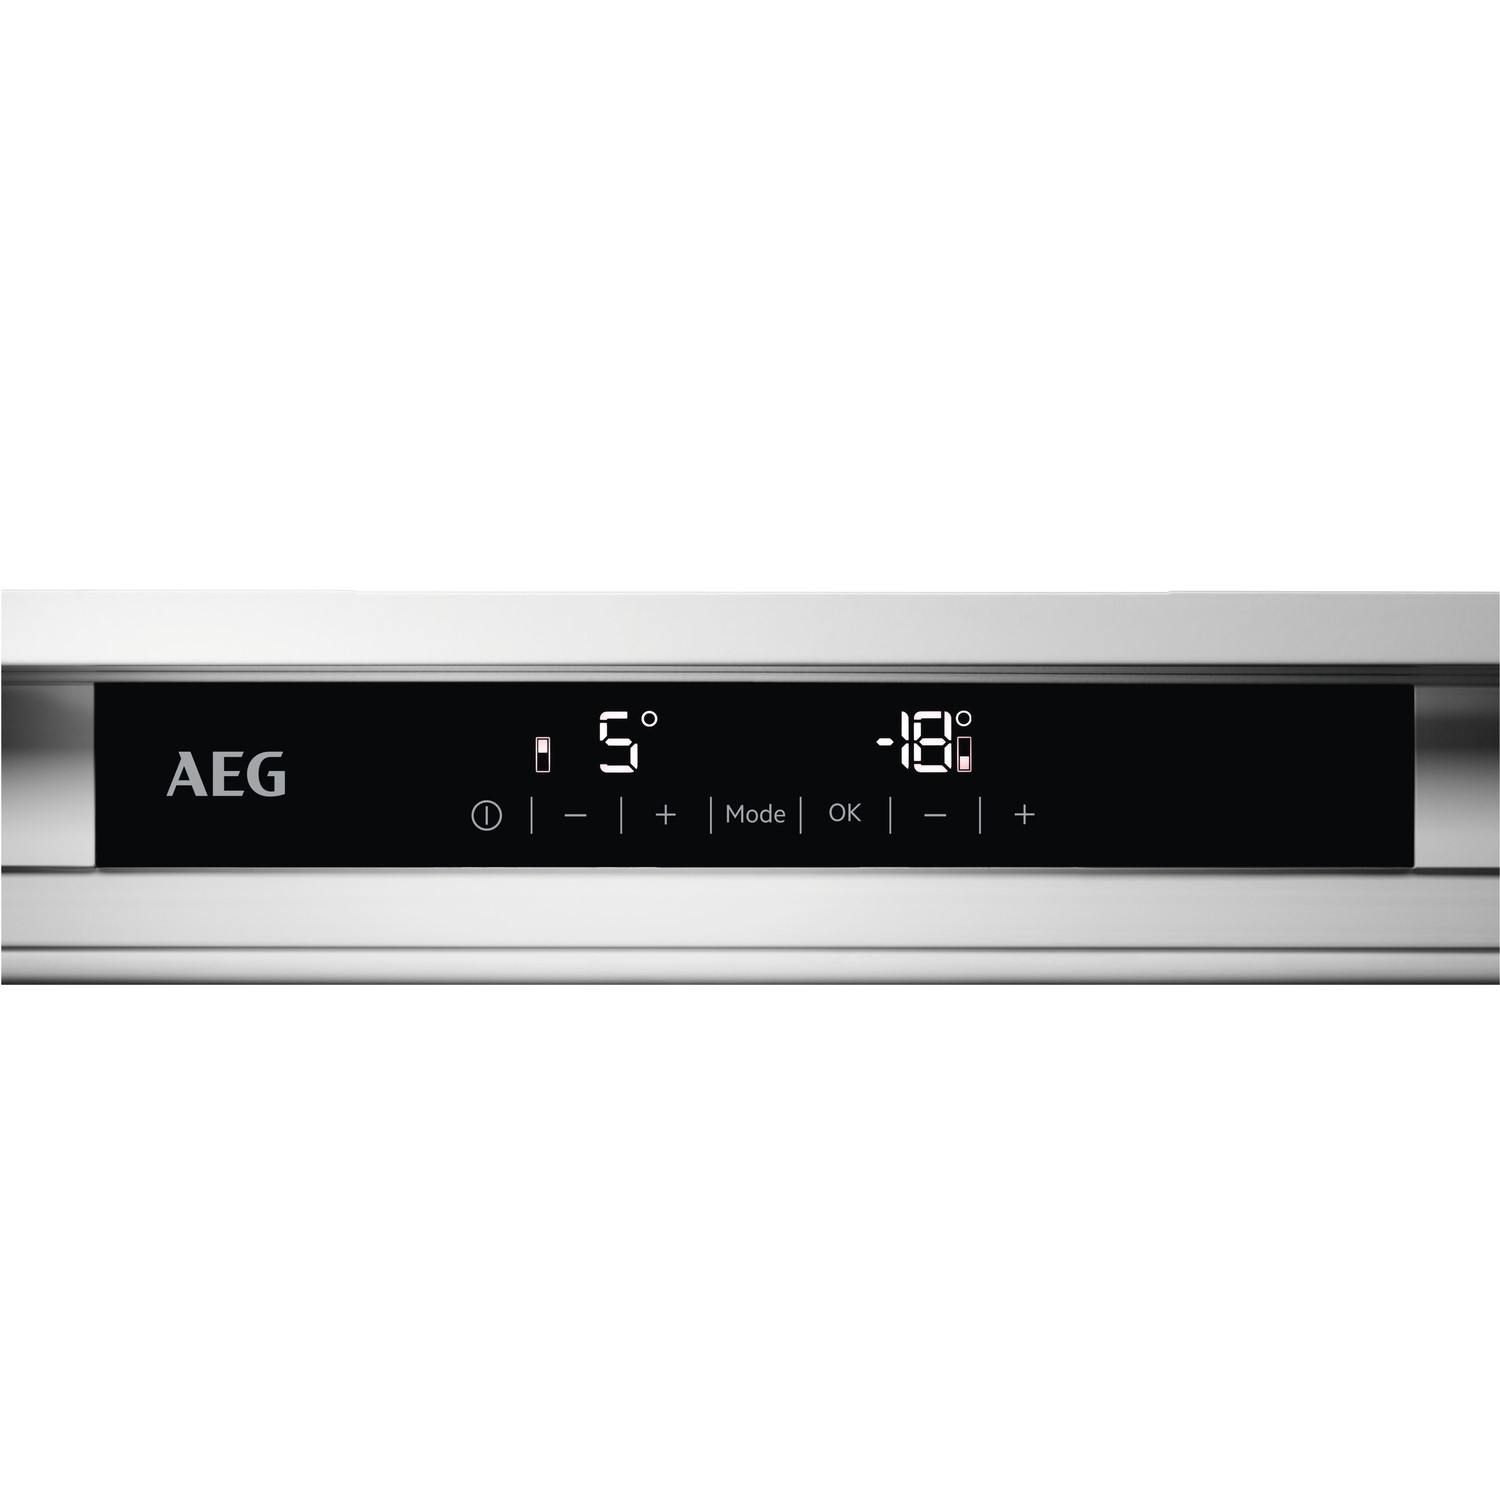 AEG 247 Litre 70/30 Integrated Fridge Freezer 